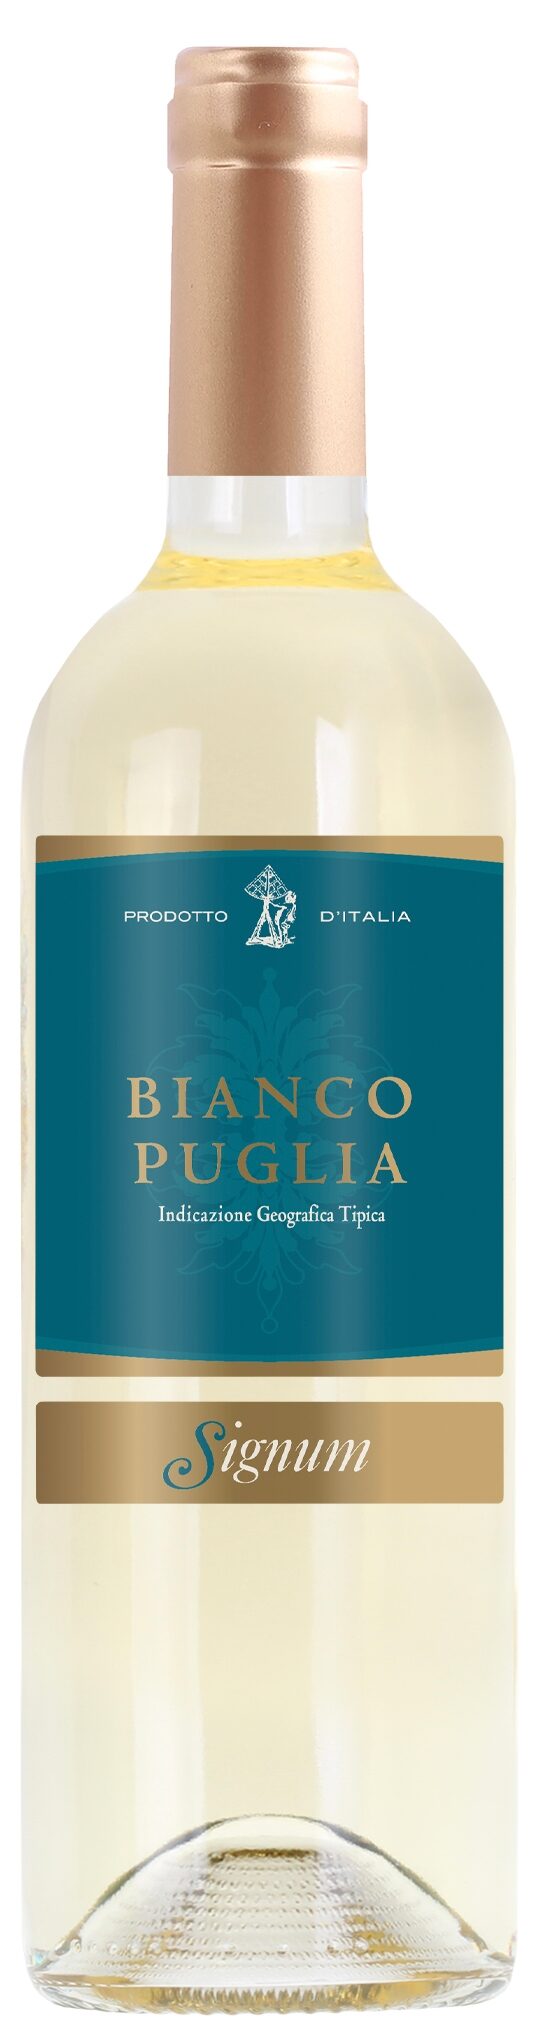 Bianco Puglia ビアンコ・プーリア